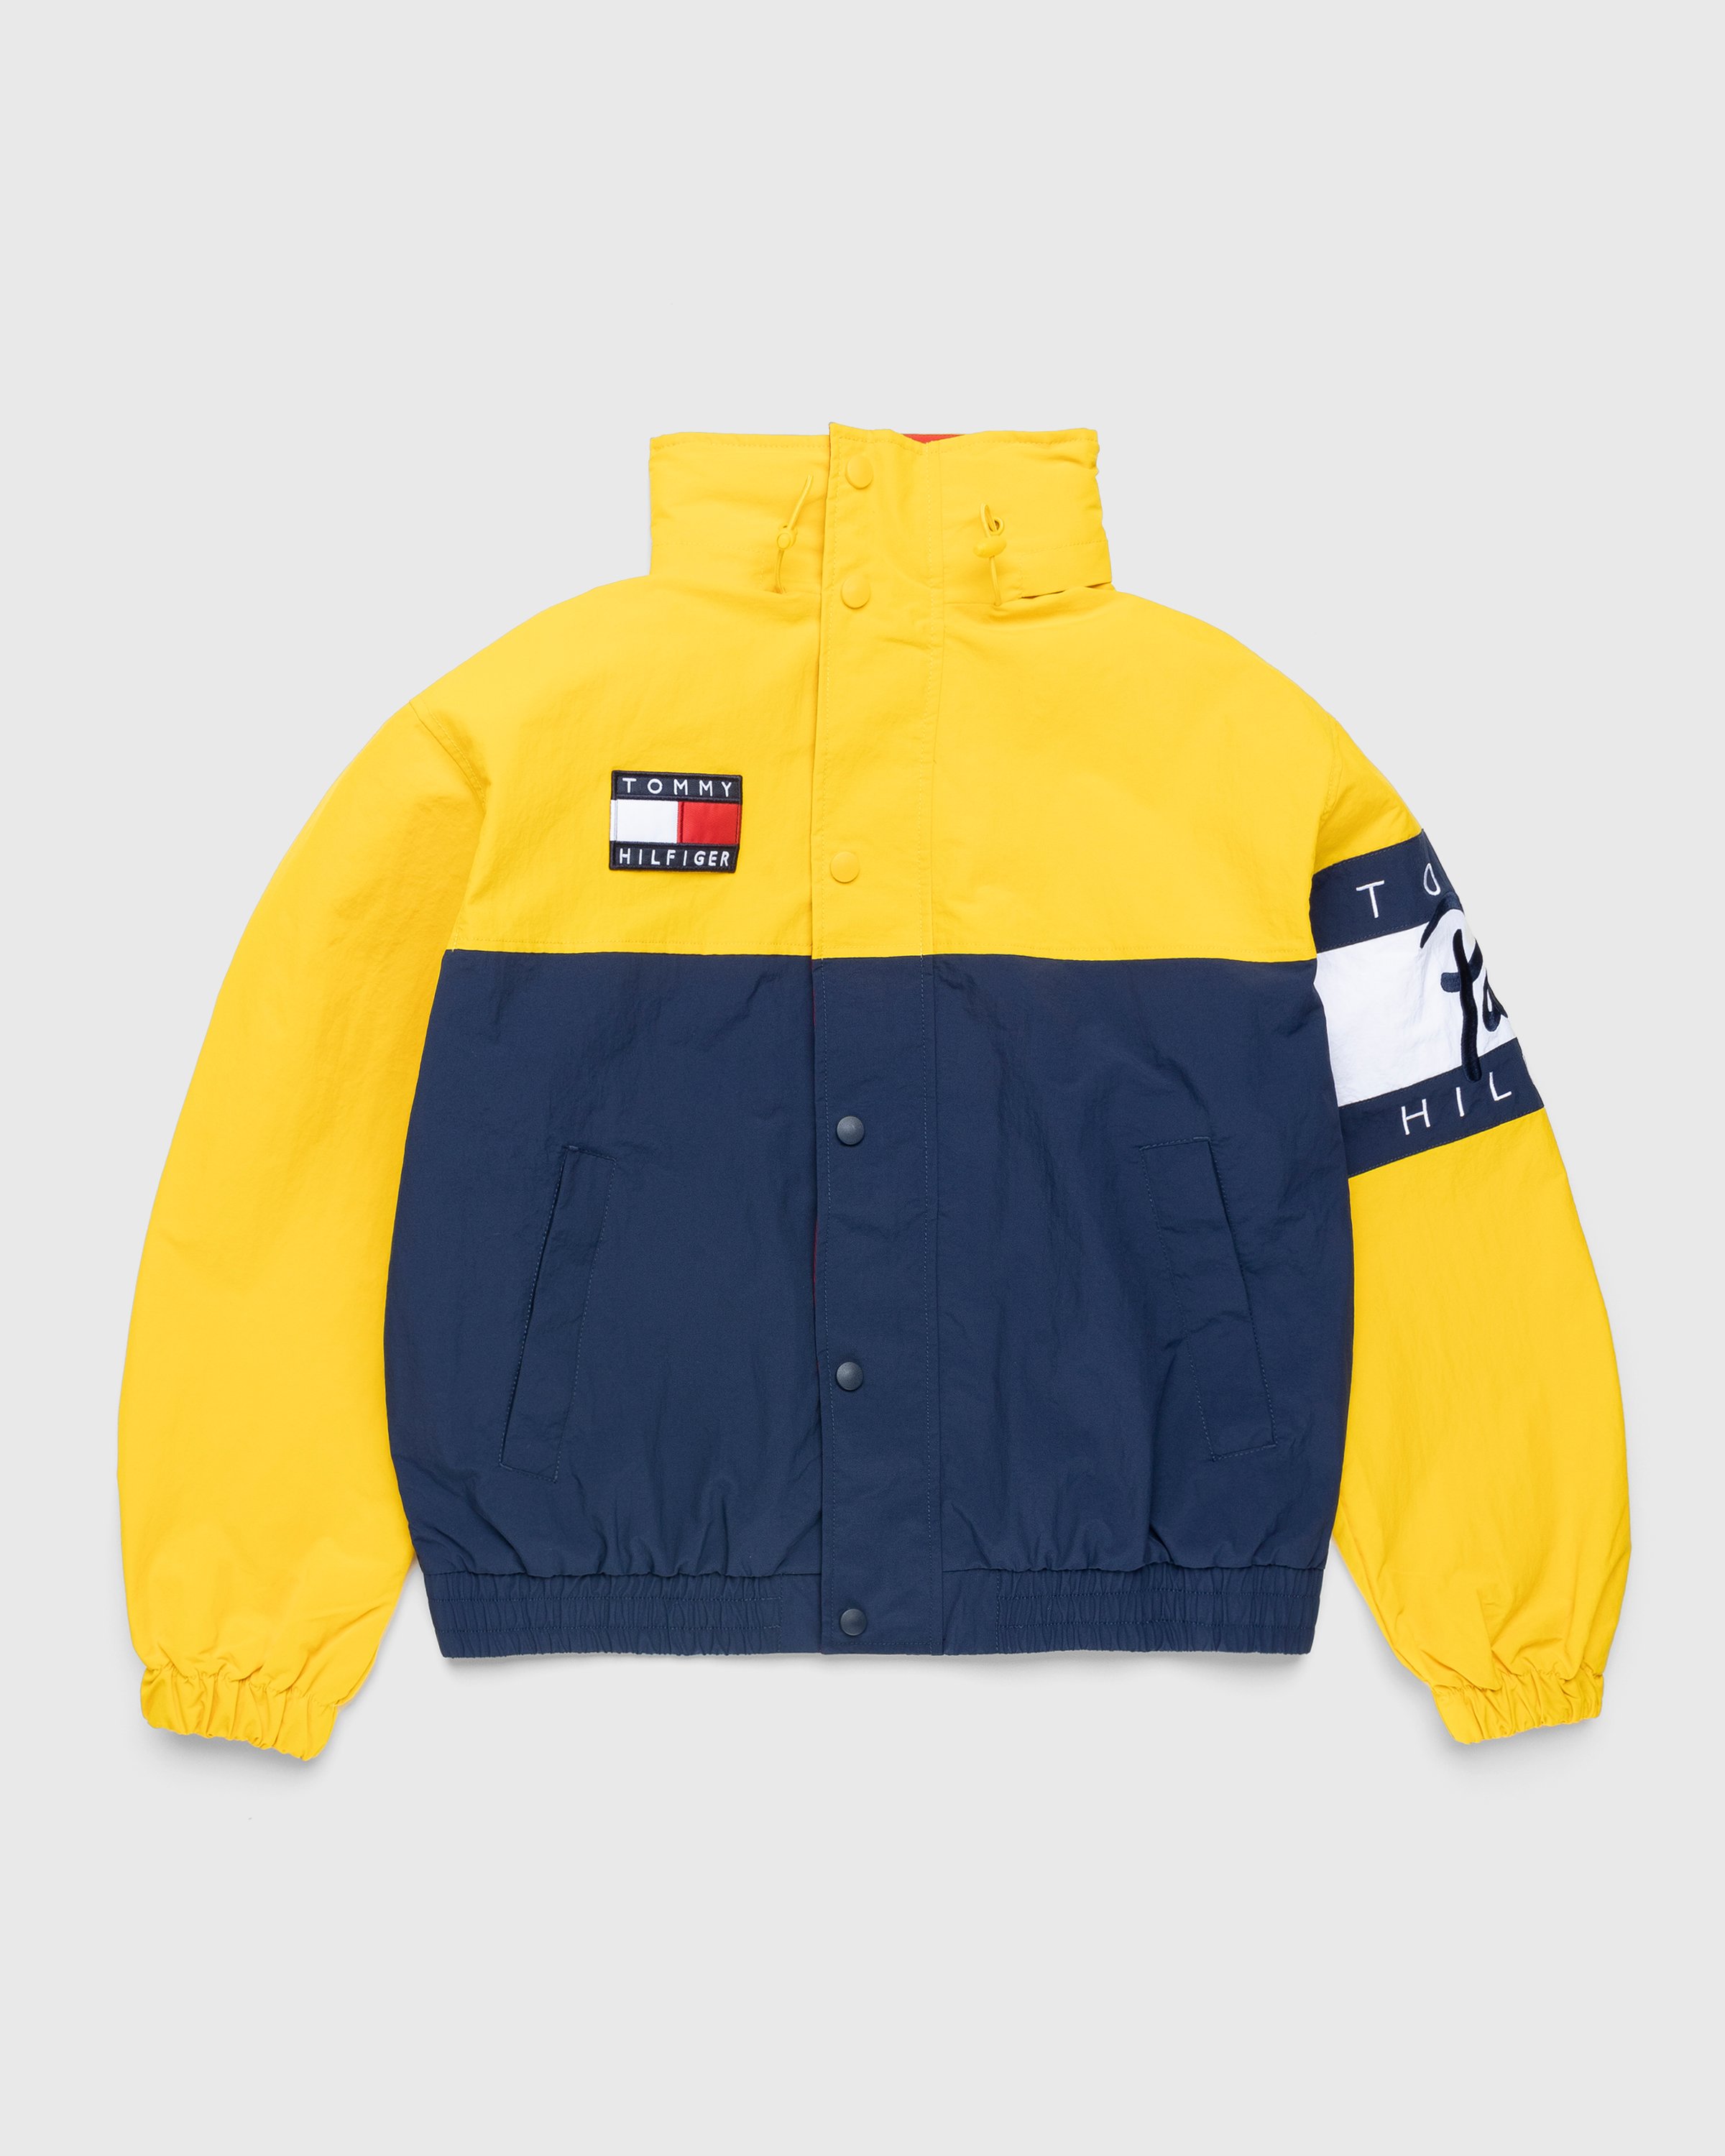 Patta x Tommy Hilfiger - Regatta Jacket Pollen - Clothing - Yellow - Image 1